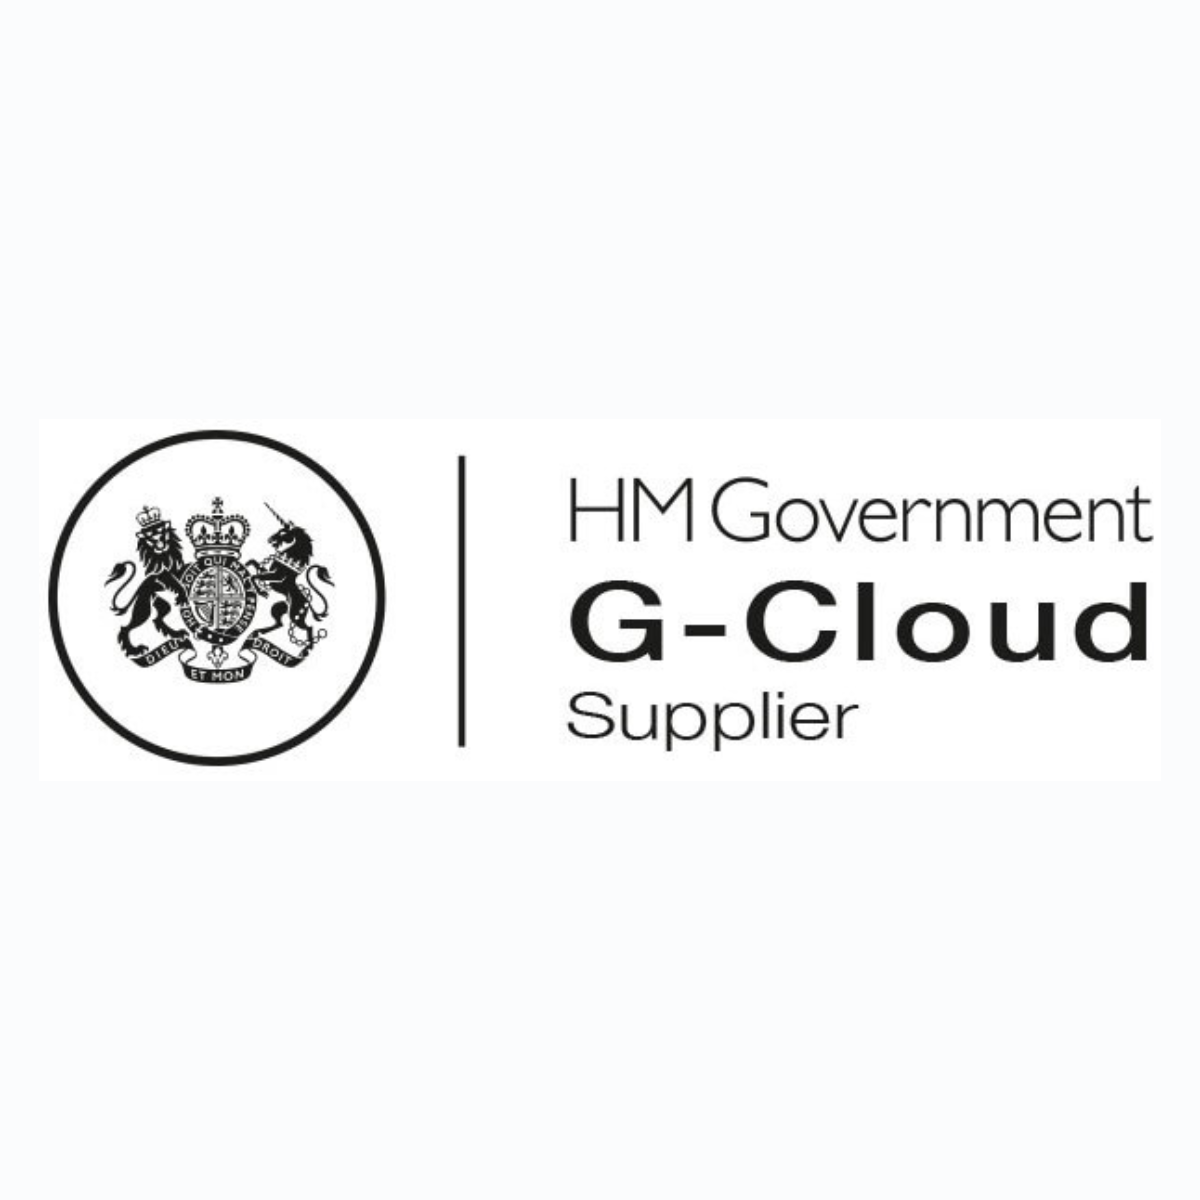 HM Government G-Cloud Supplier Logo